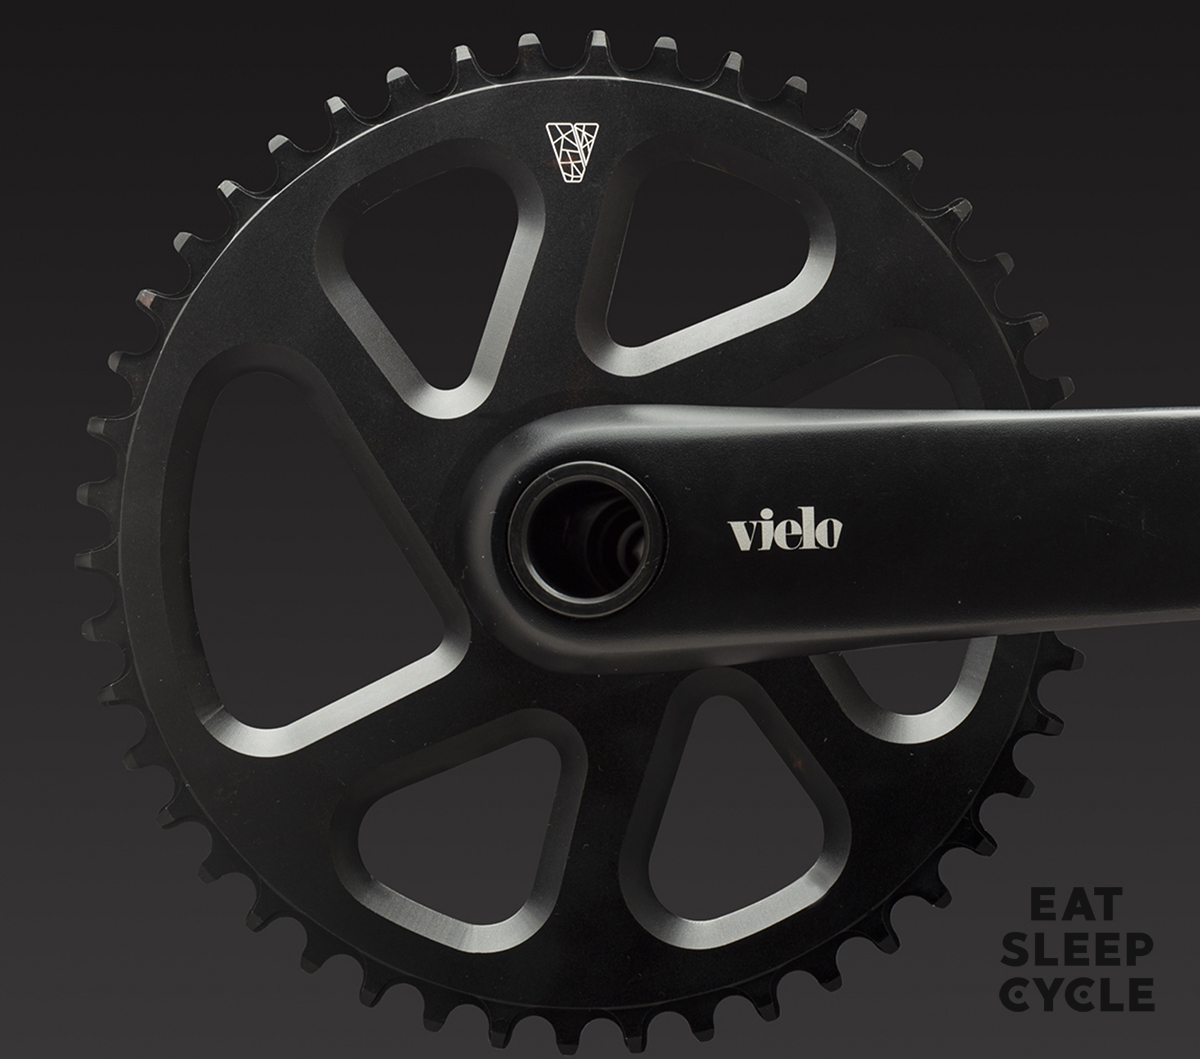 Eat-Sleep-Cycle-Cycling-Girona-Bike-Vielo-1x-Chainring